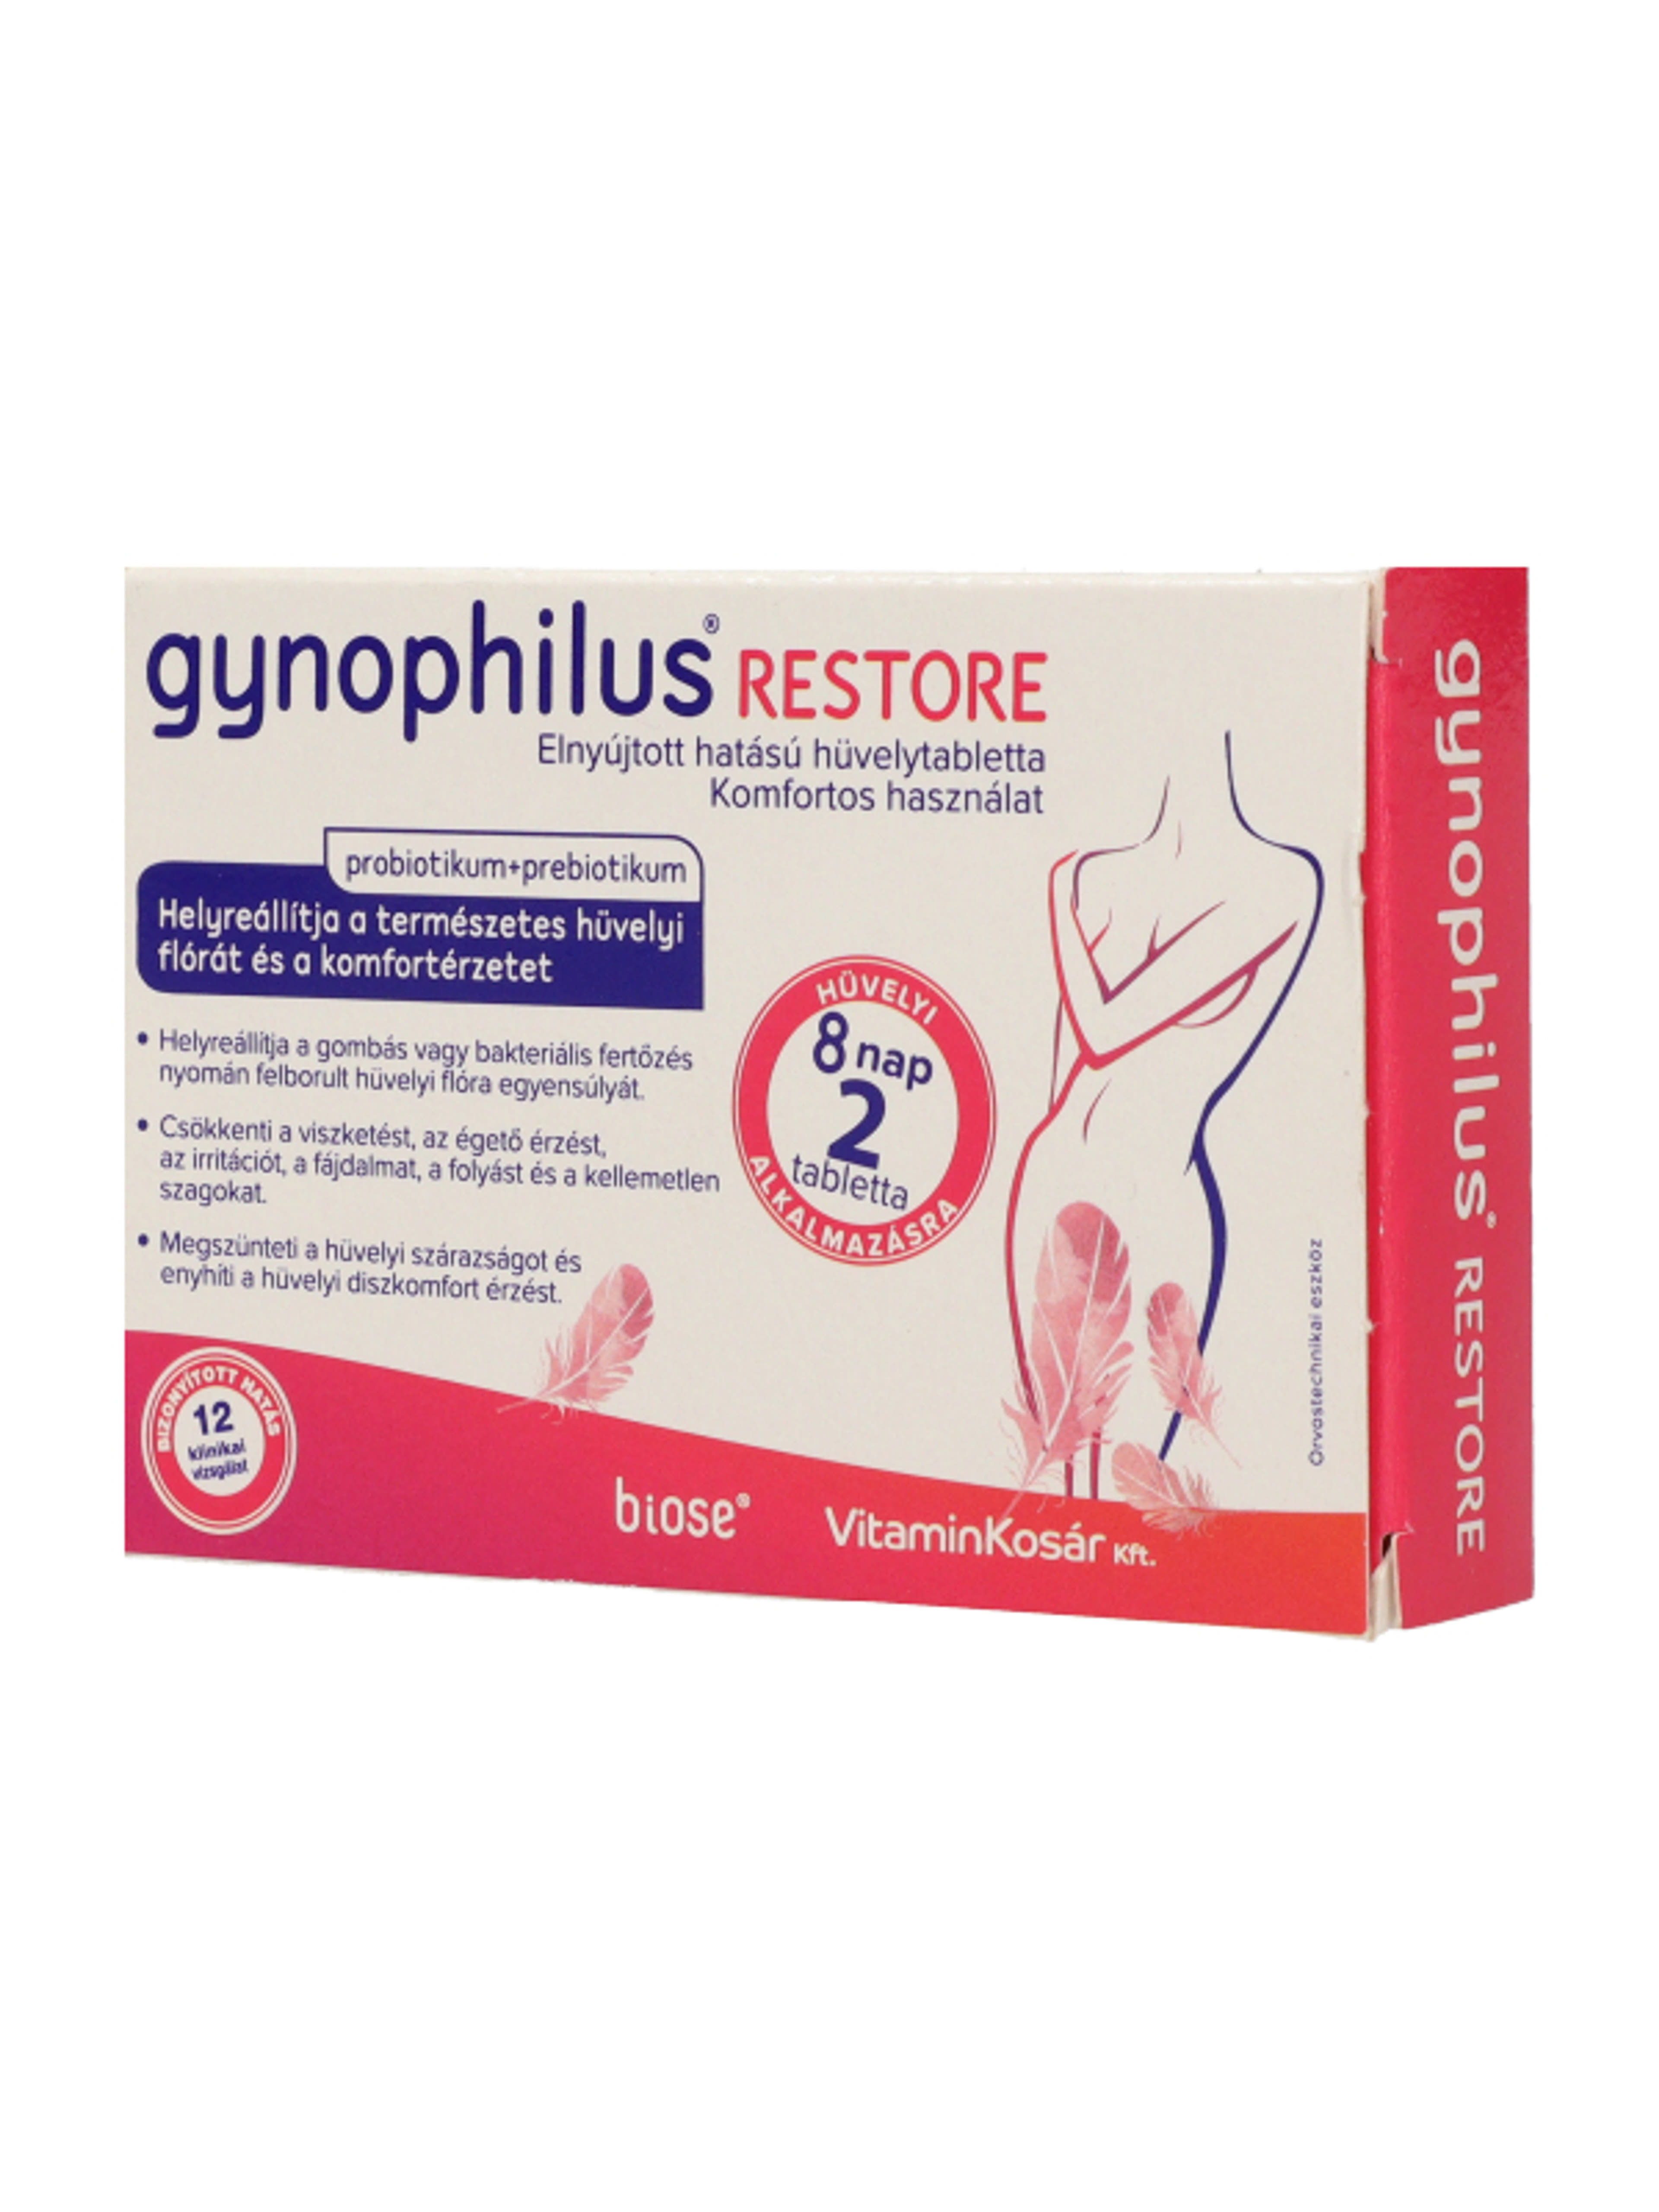 Gynophilus Restore hüvelytabletta - 2 db-3